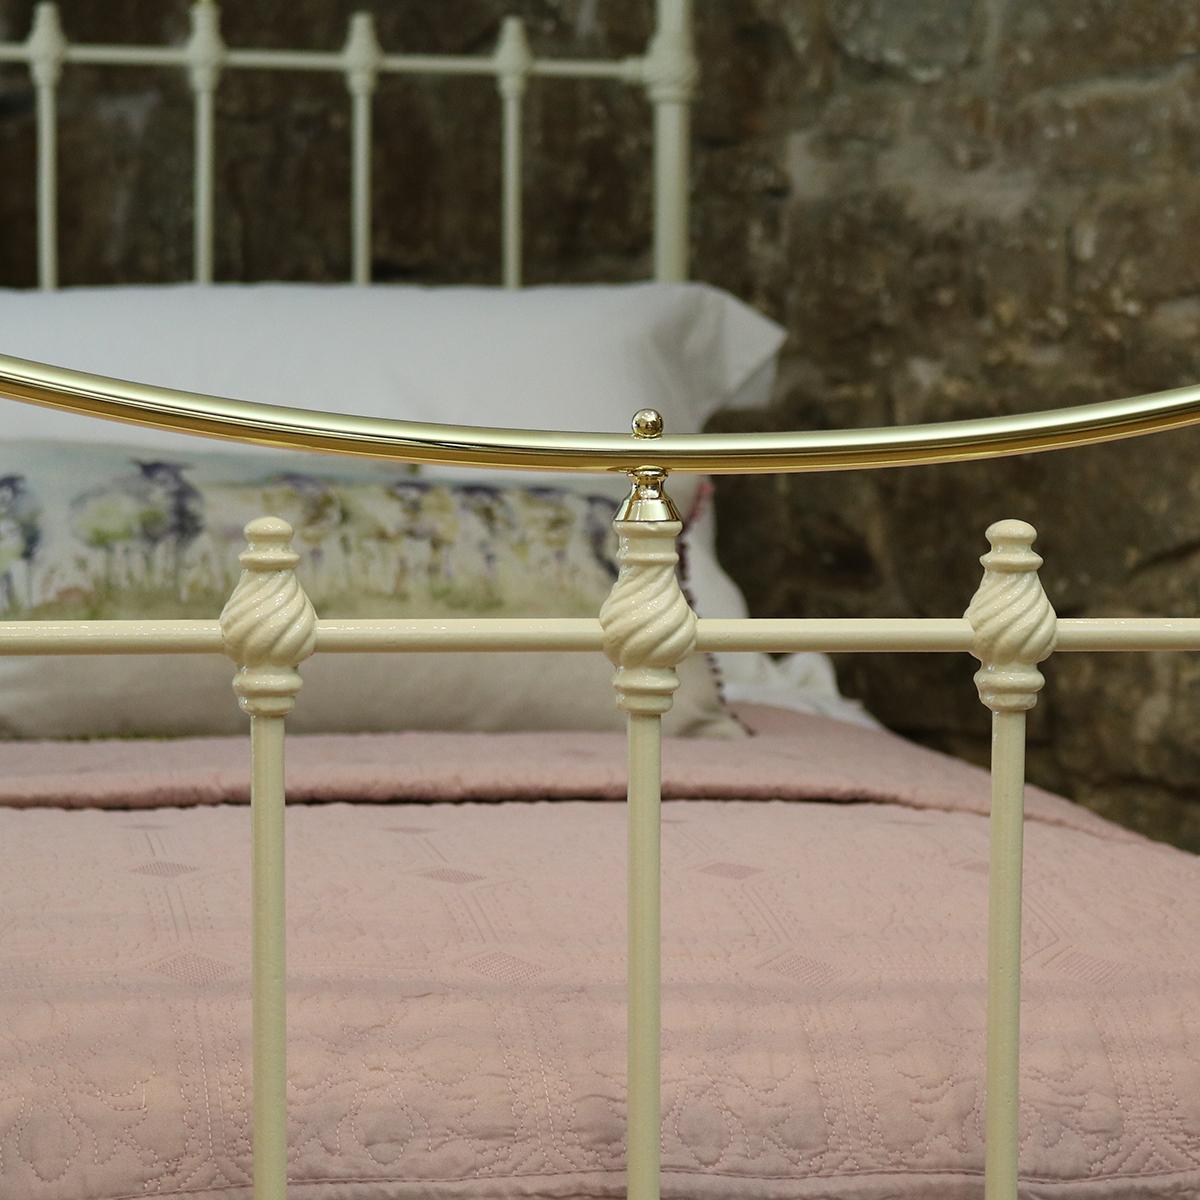 Cast Victorian Bed in Cream